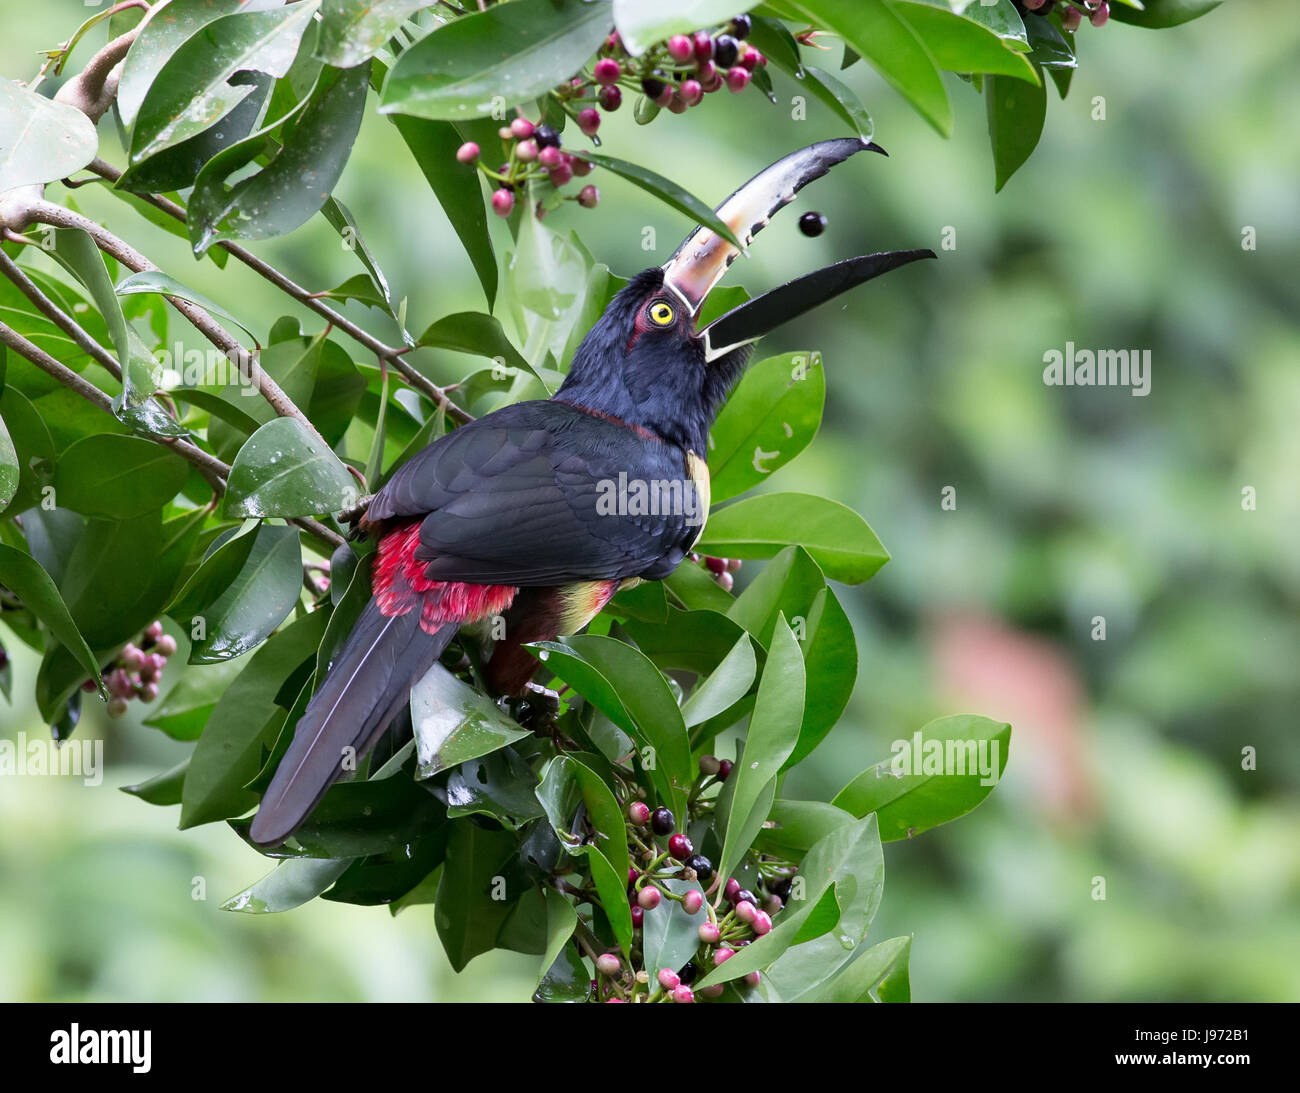 Collared Aracari catching a berry in his beak Stock Photo